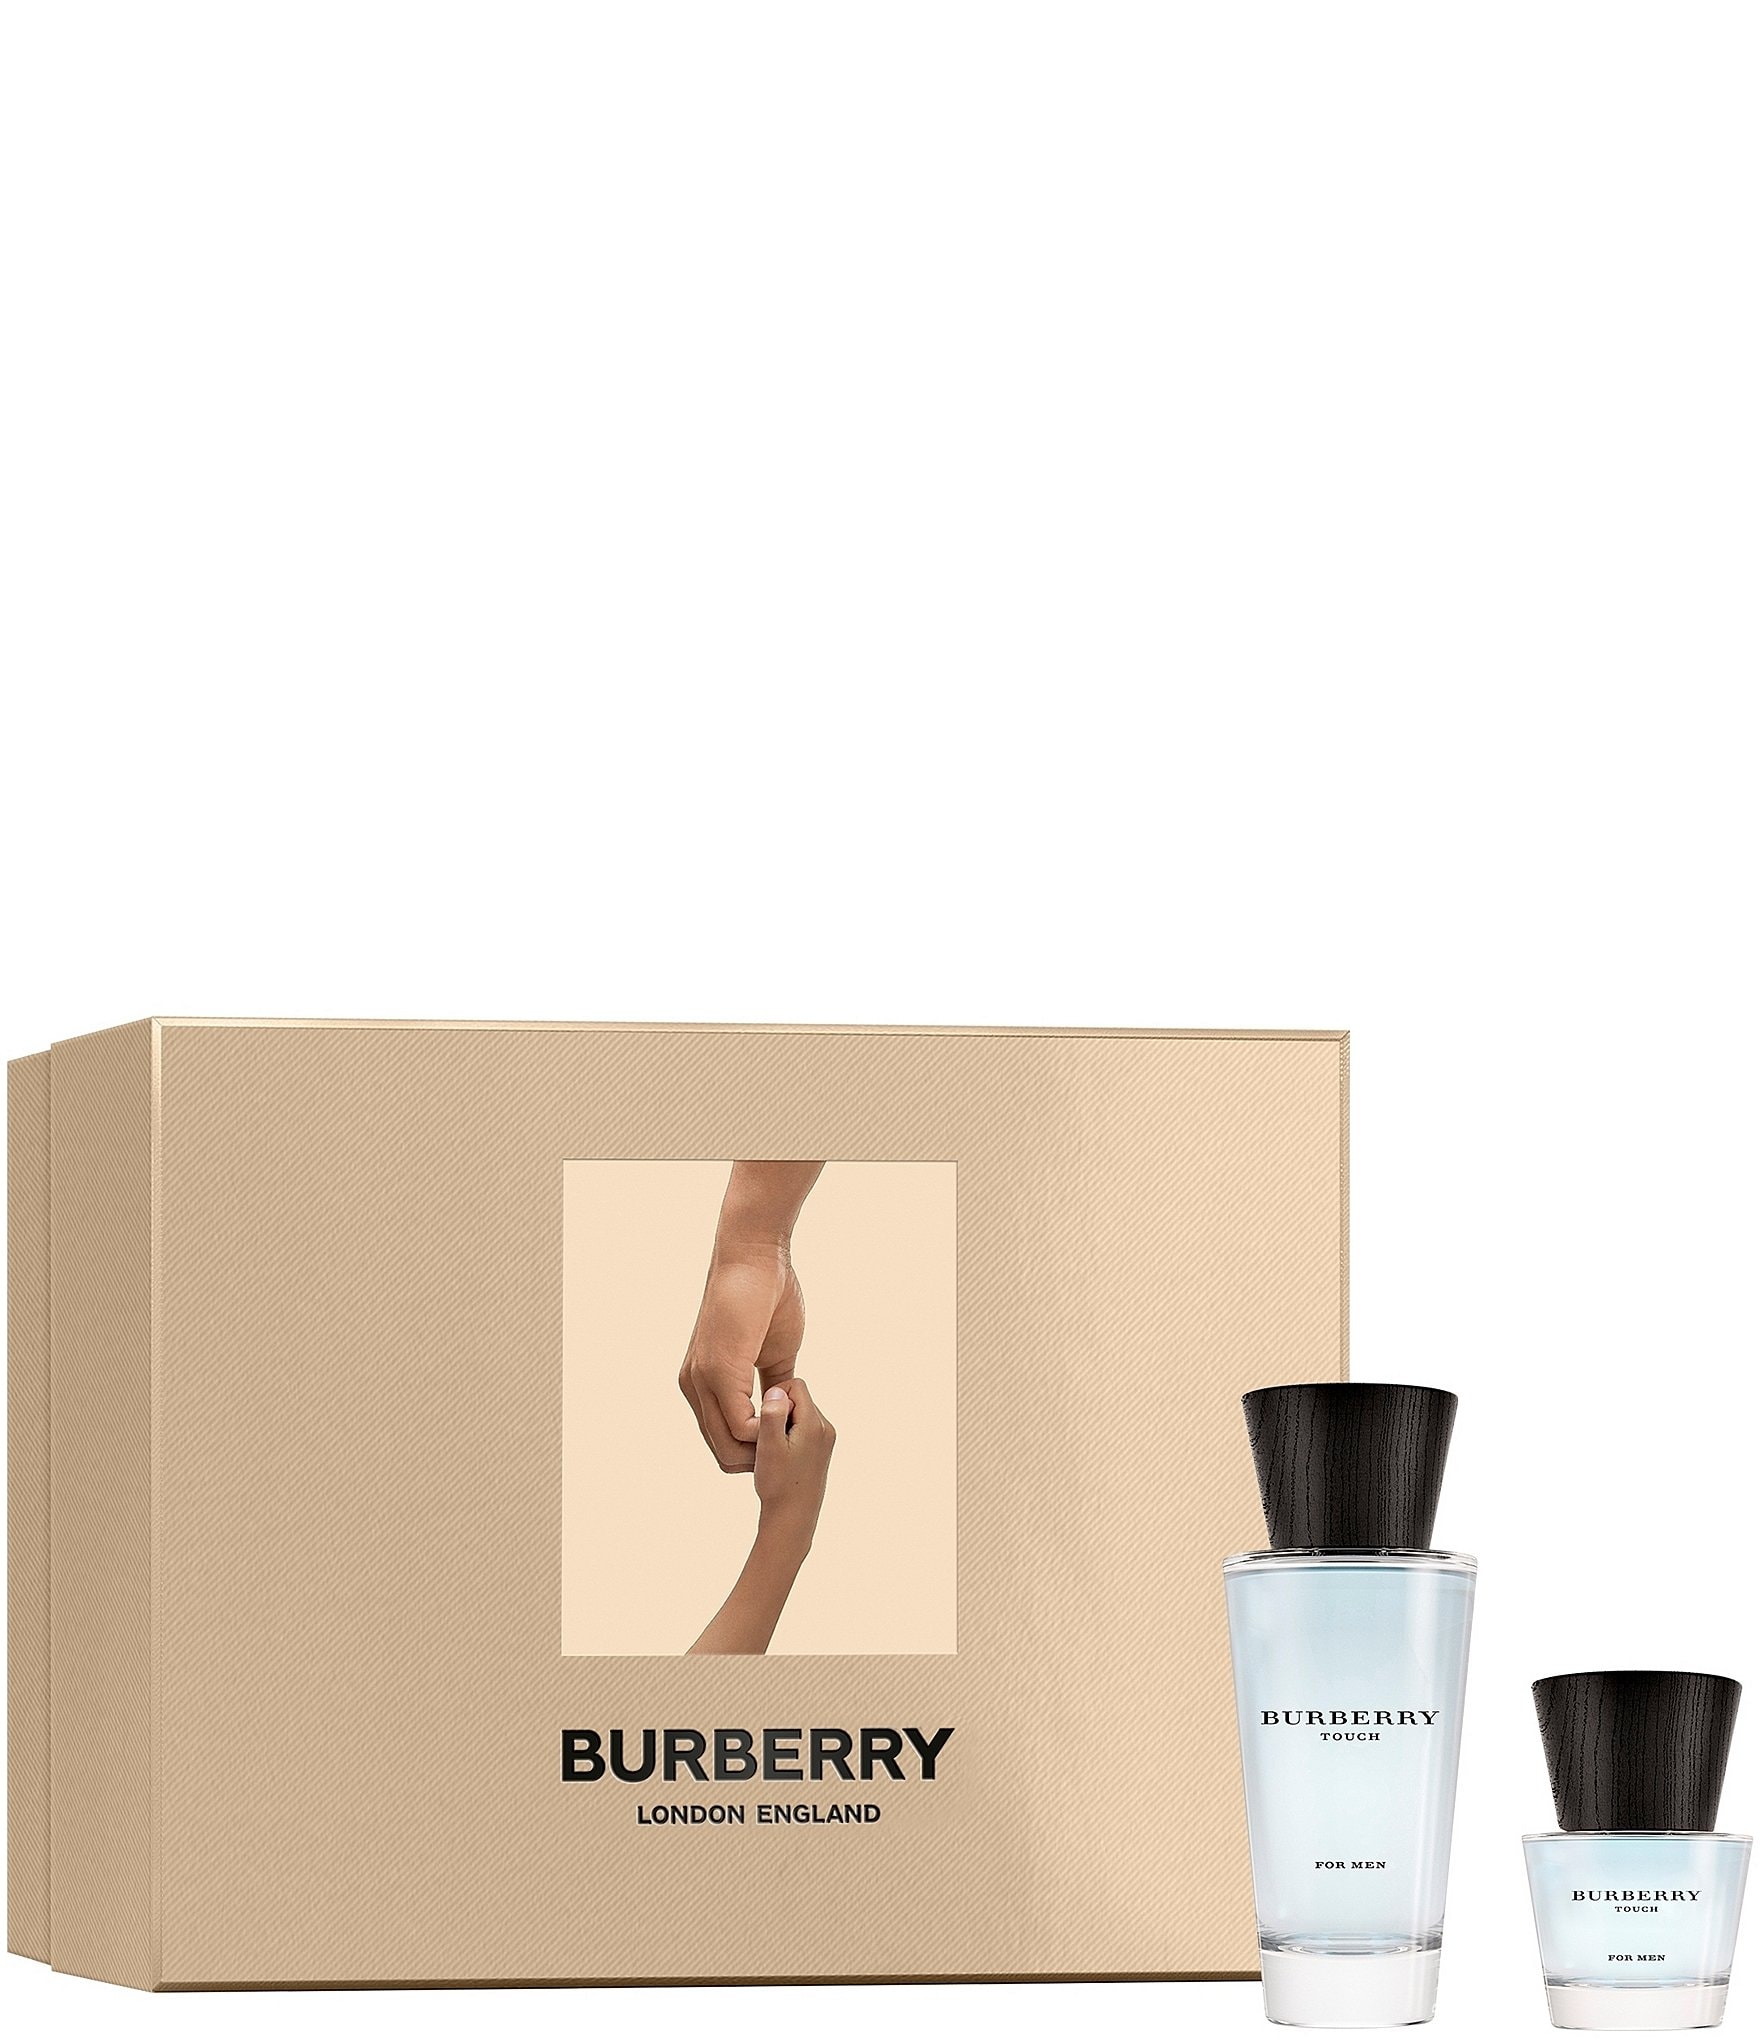 Burberry Fragrance, Perfume & Cologne | Dillard's